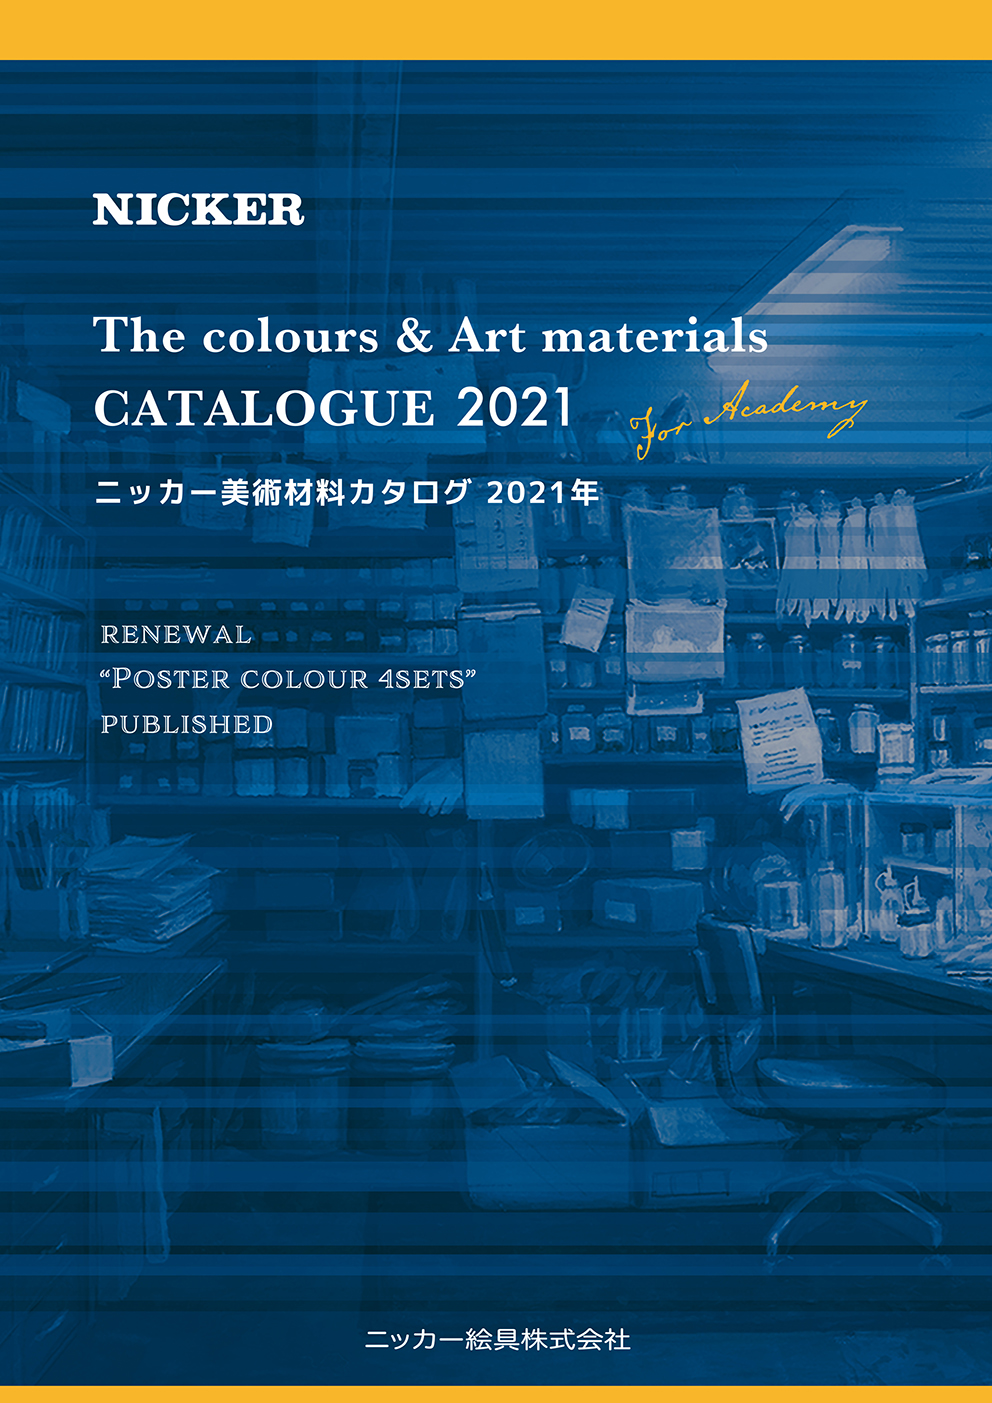 Nicker Poster Colour 40ml